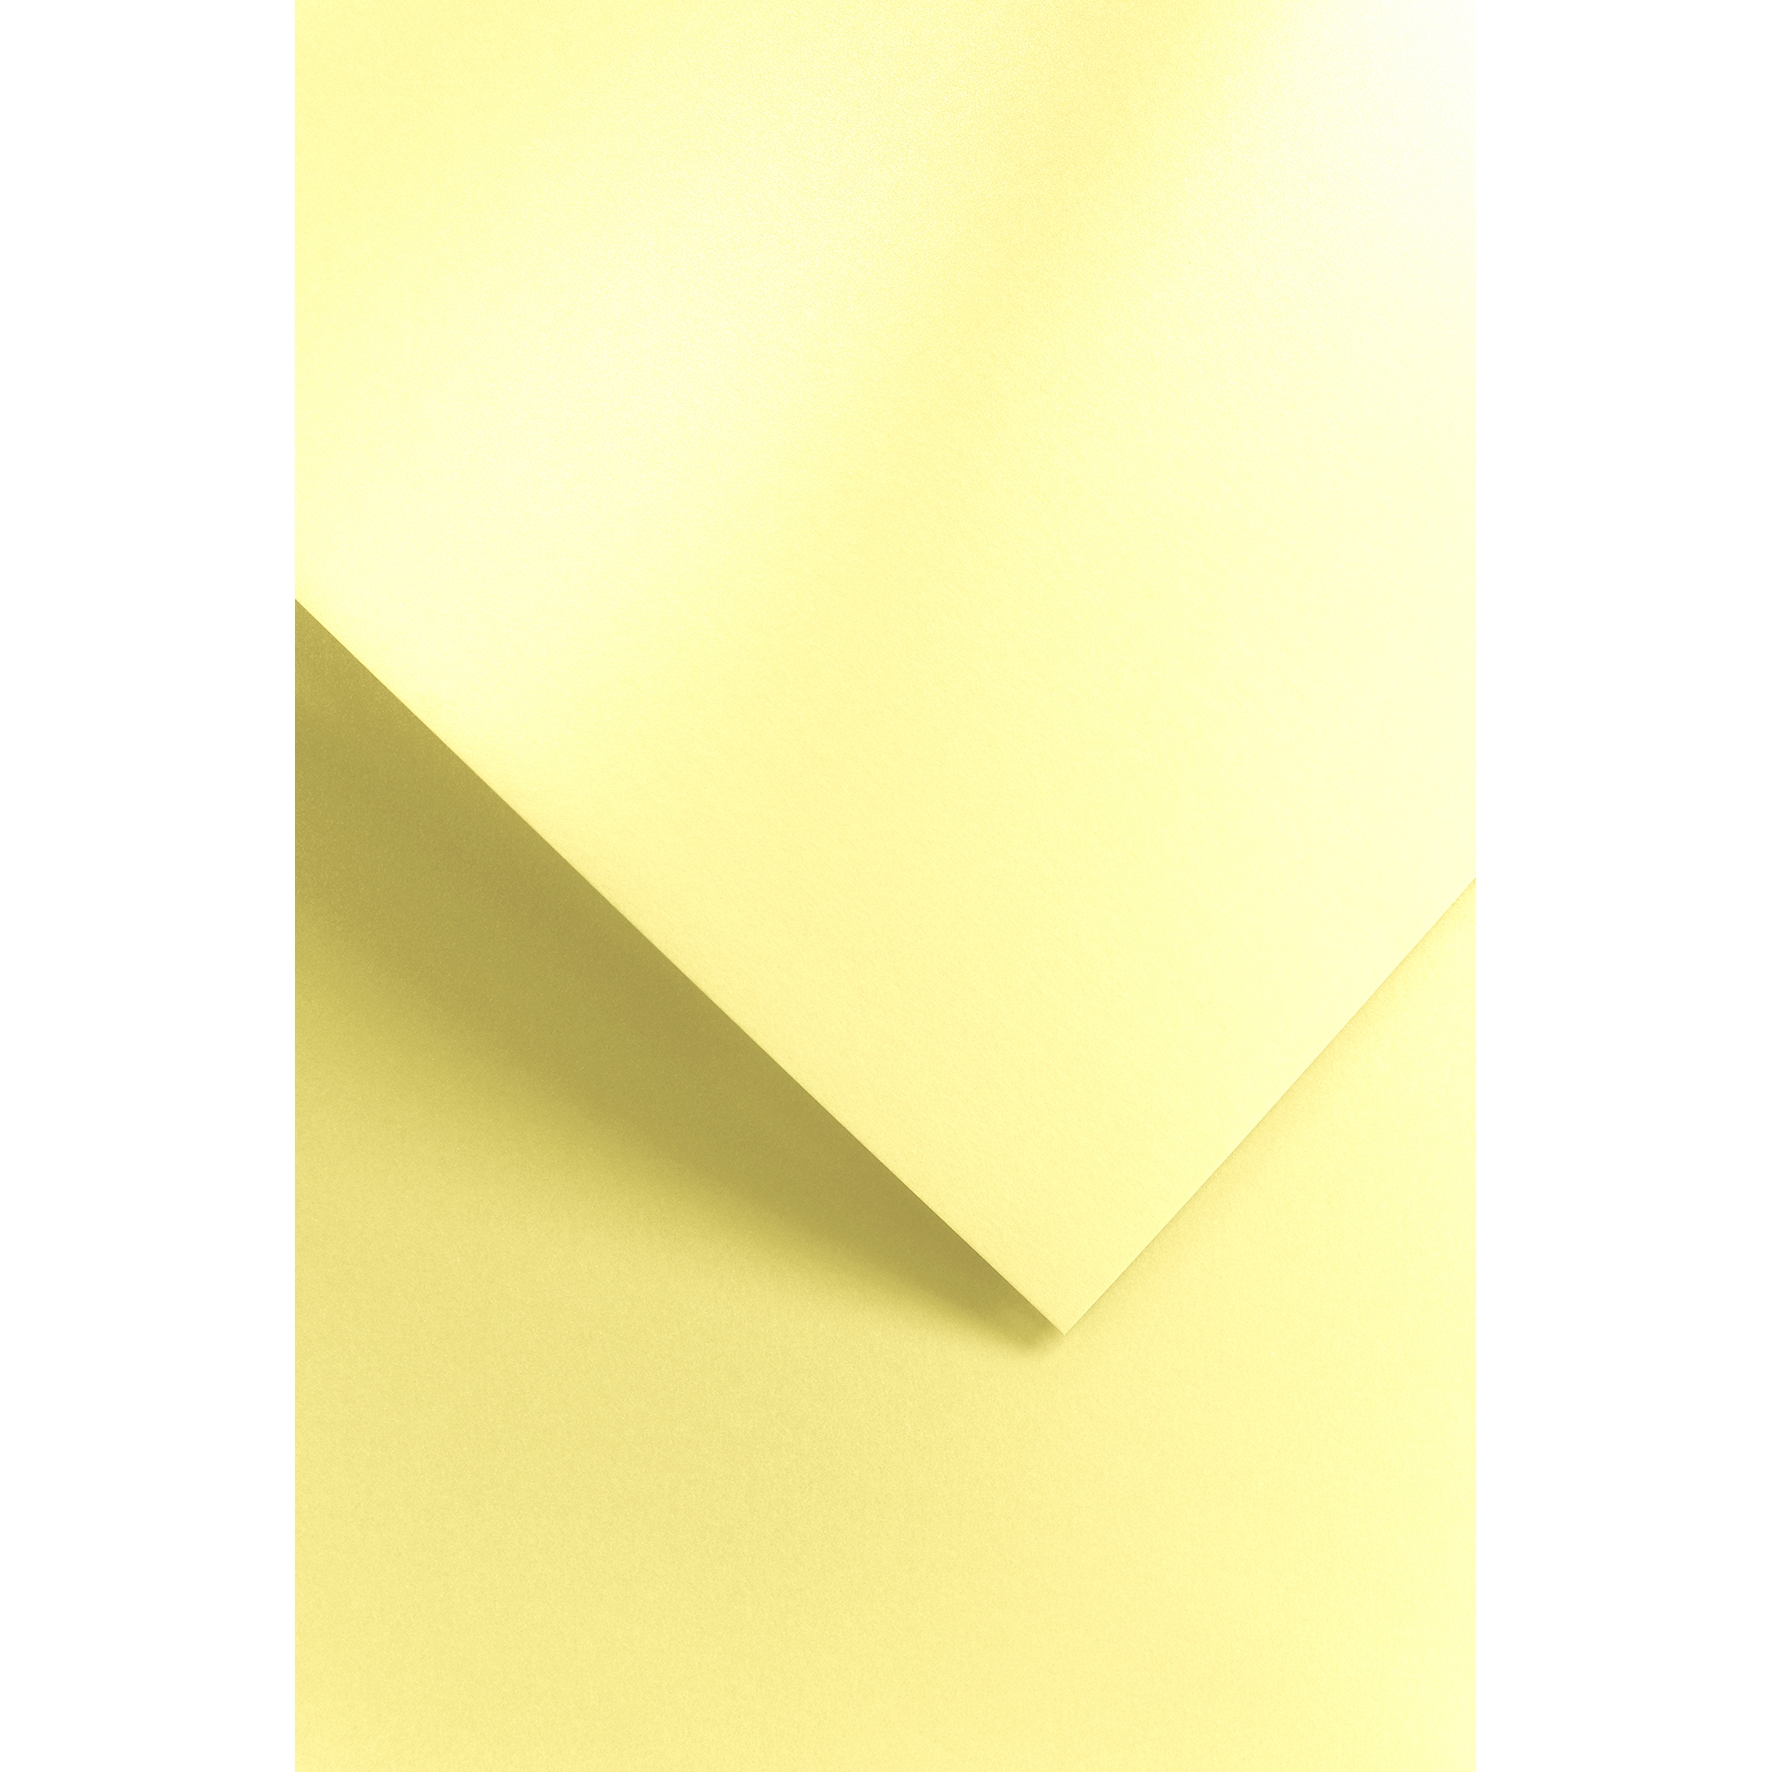 Ozdobný papír Millenium, žlutý, 220g, 20ks